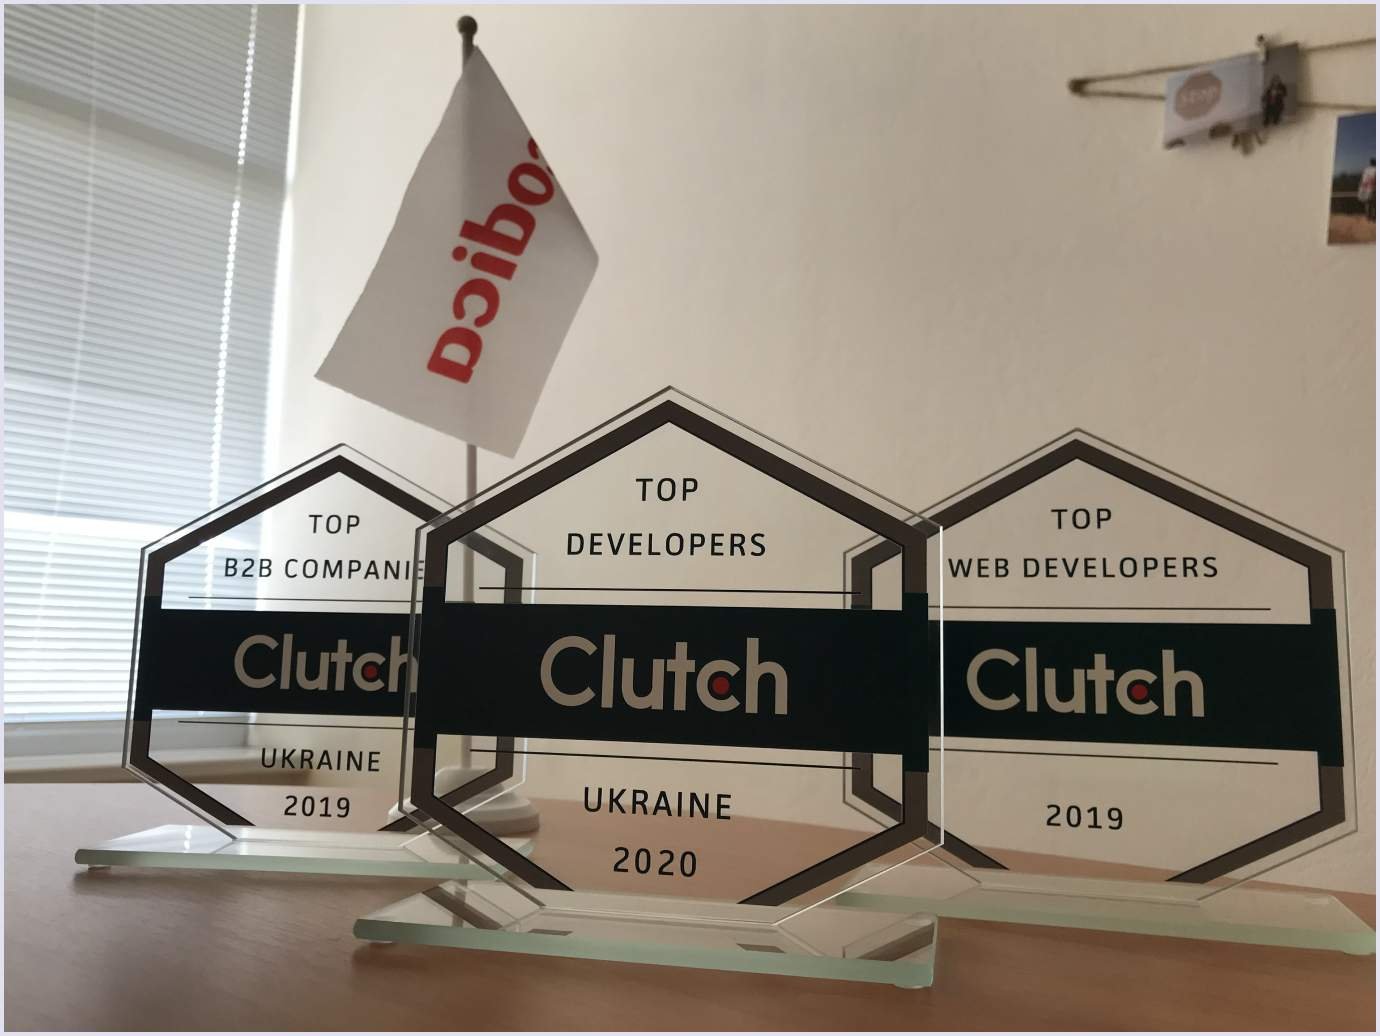 Three Clutch awards for top web development, B2B companies in 2019-2020